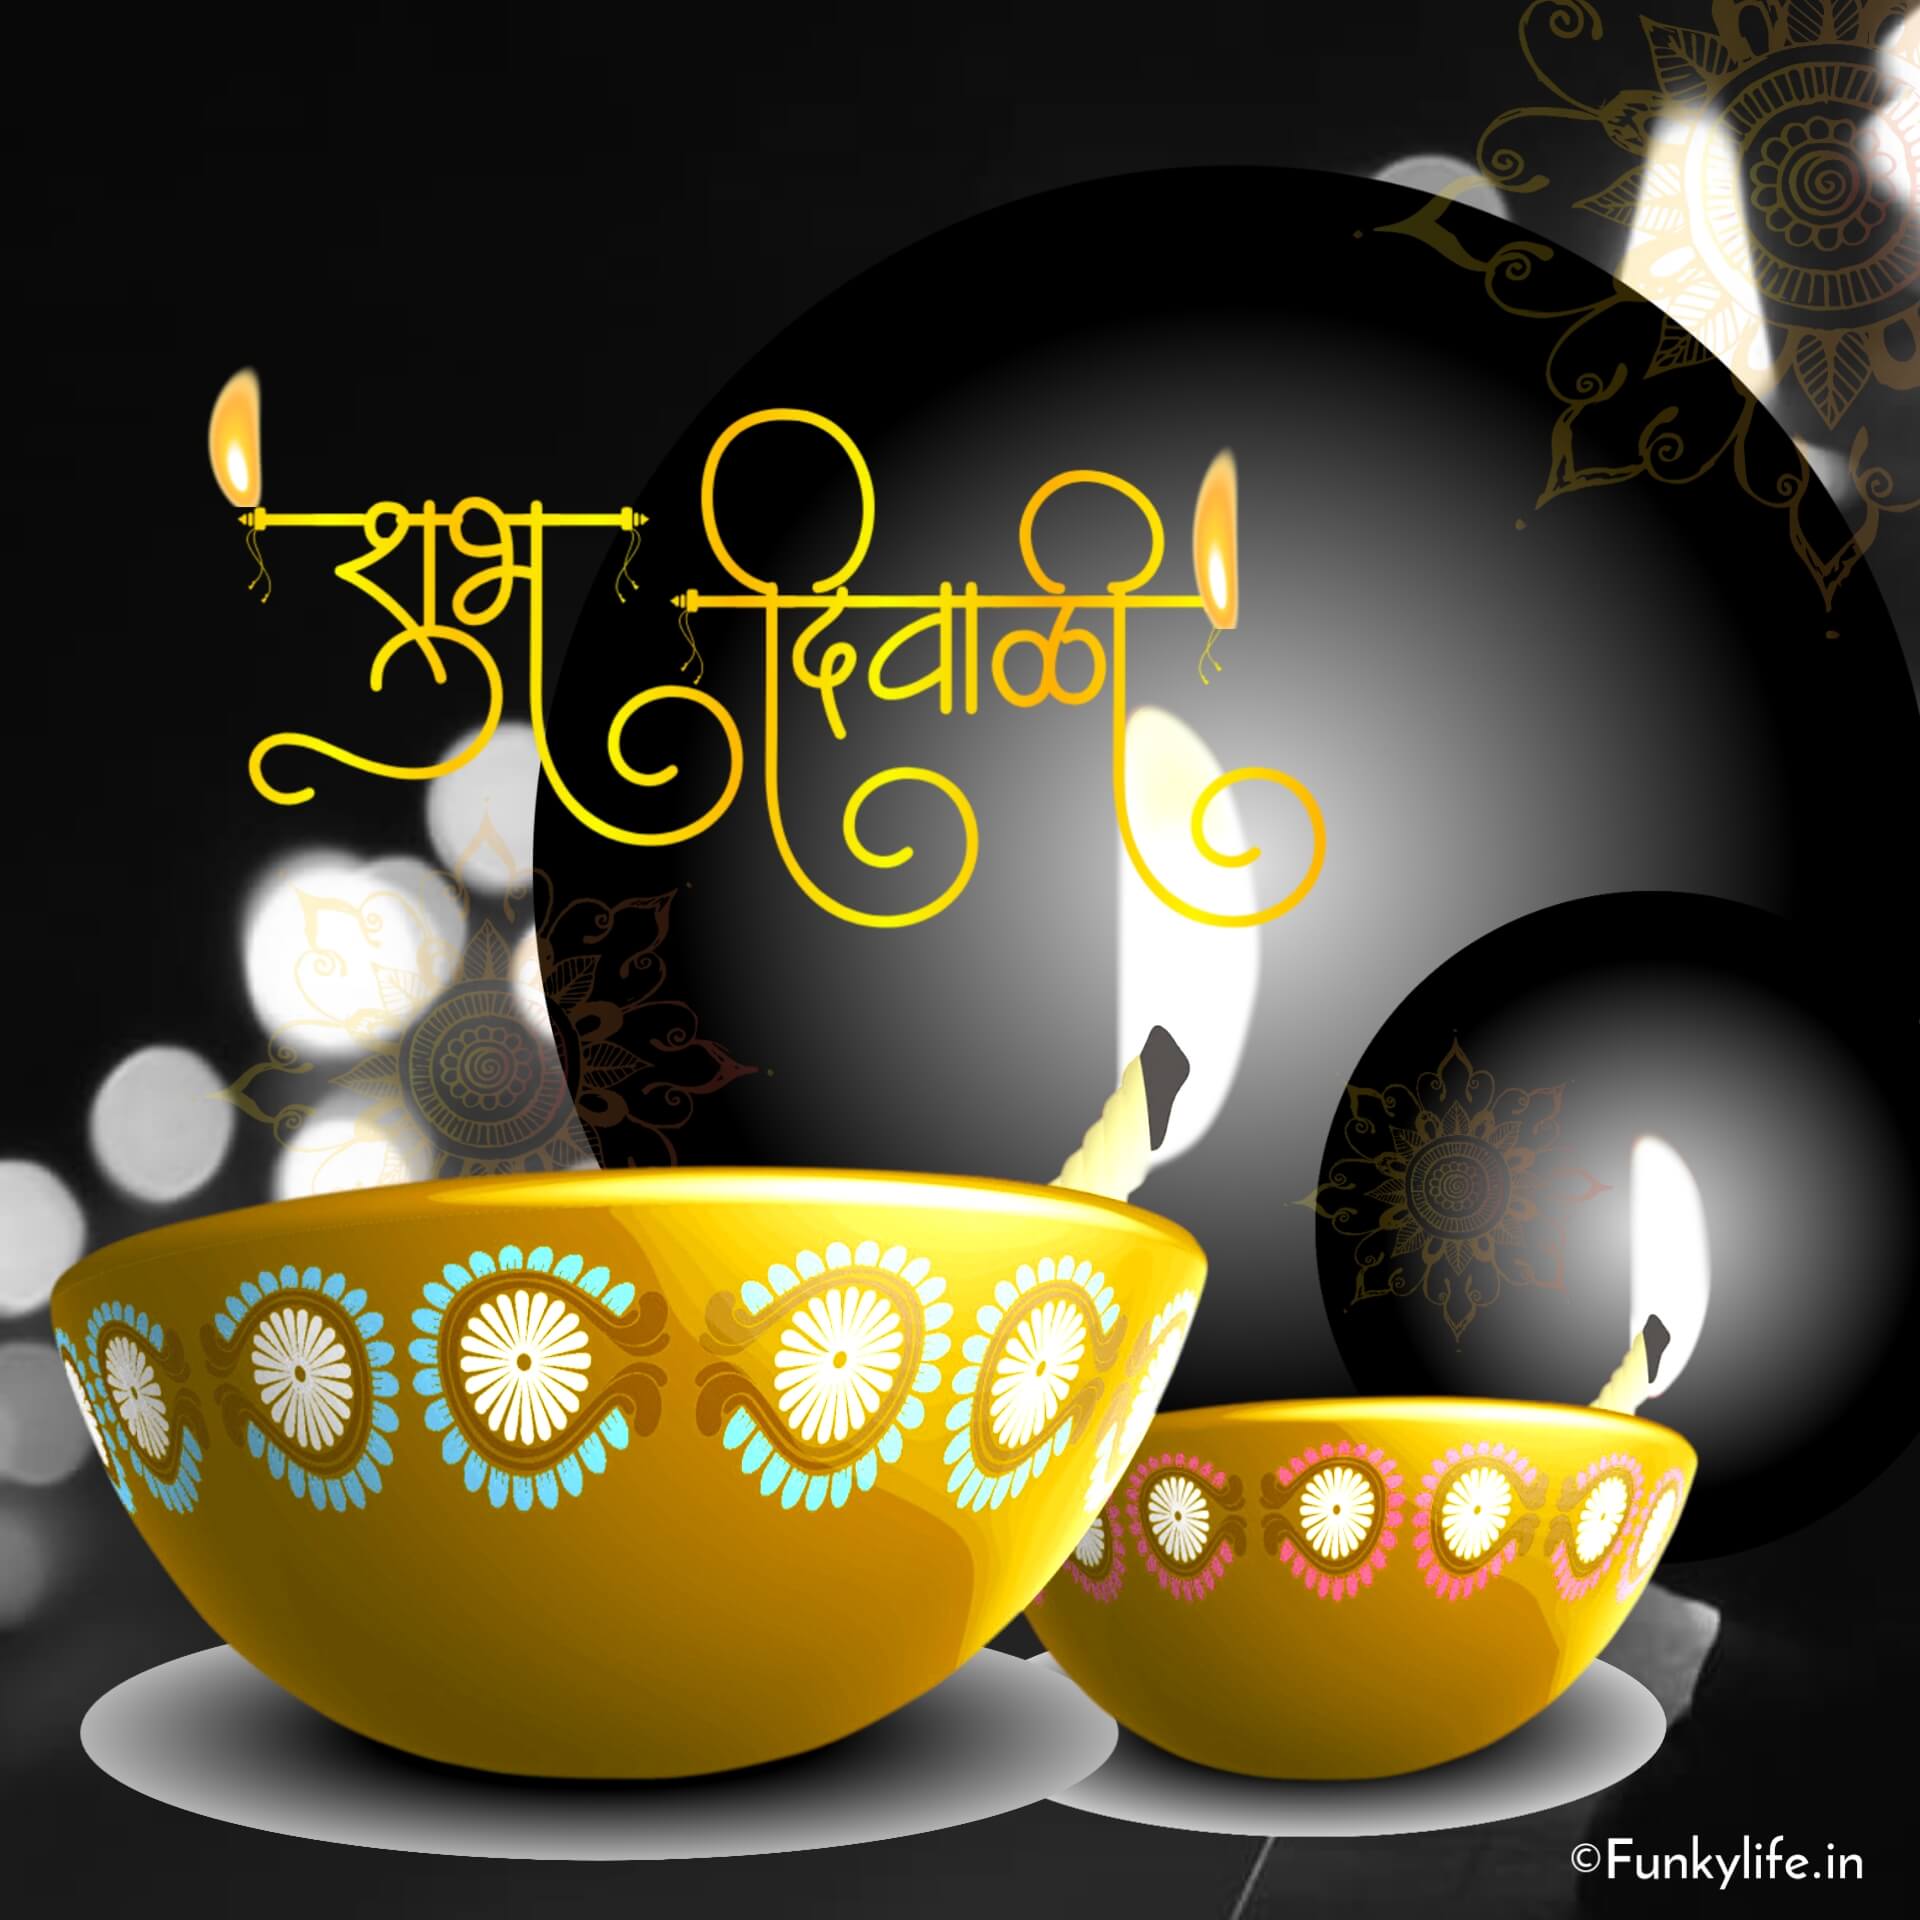 Shubh Diwali Image